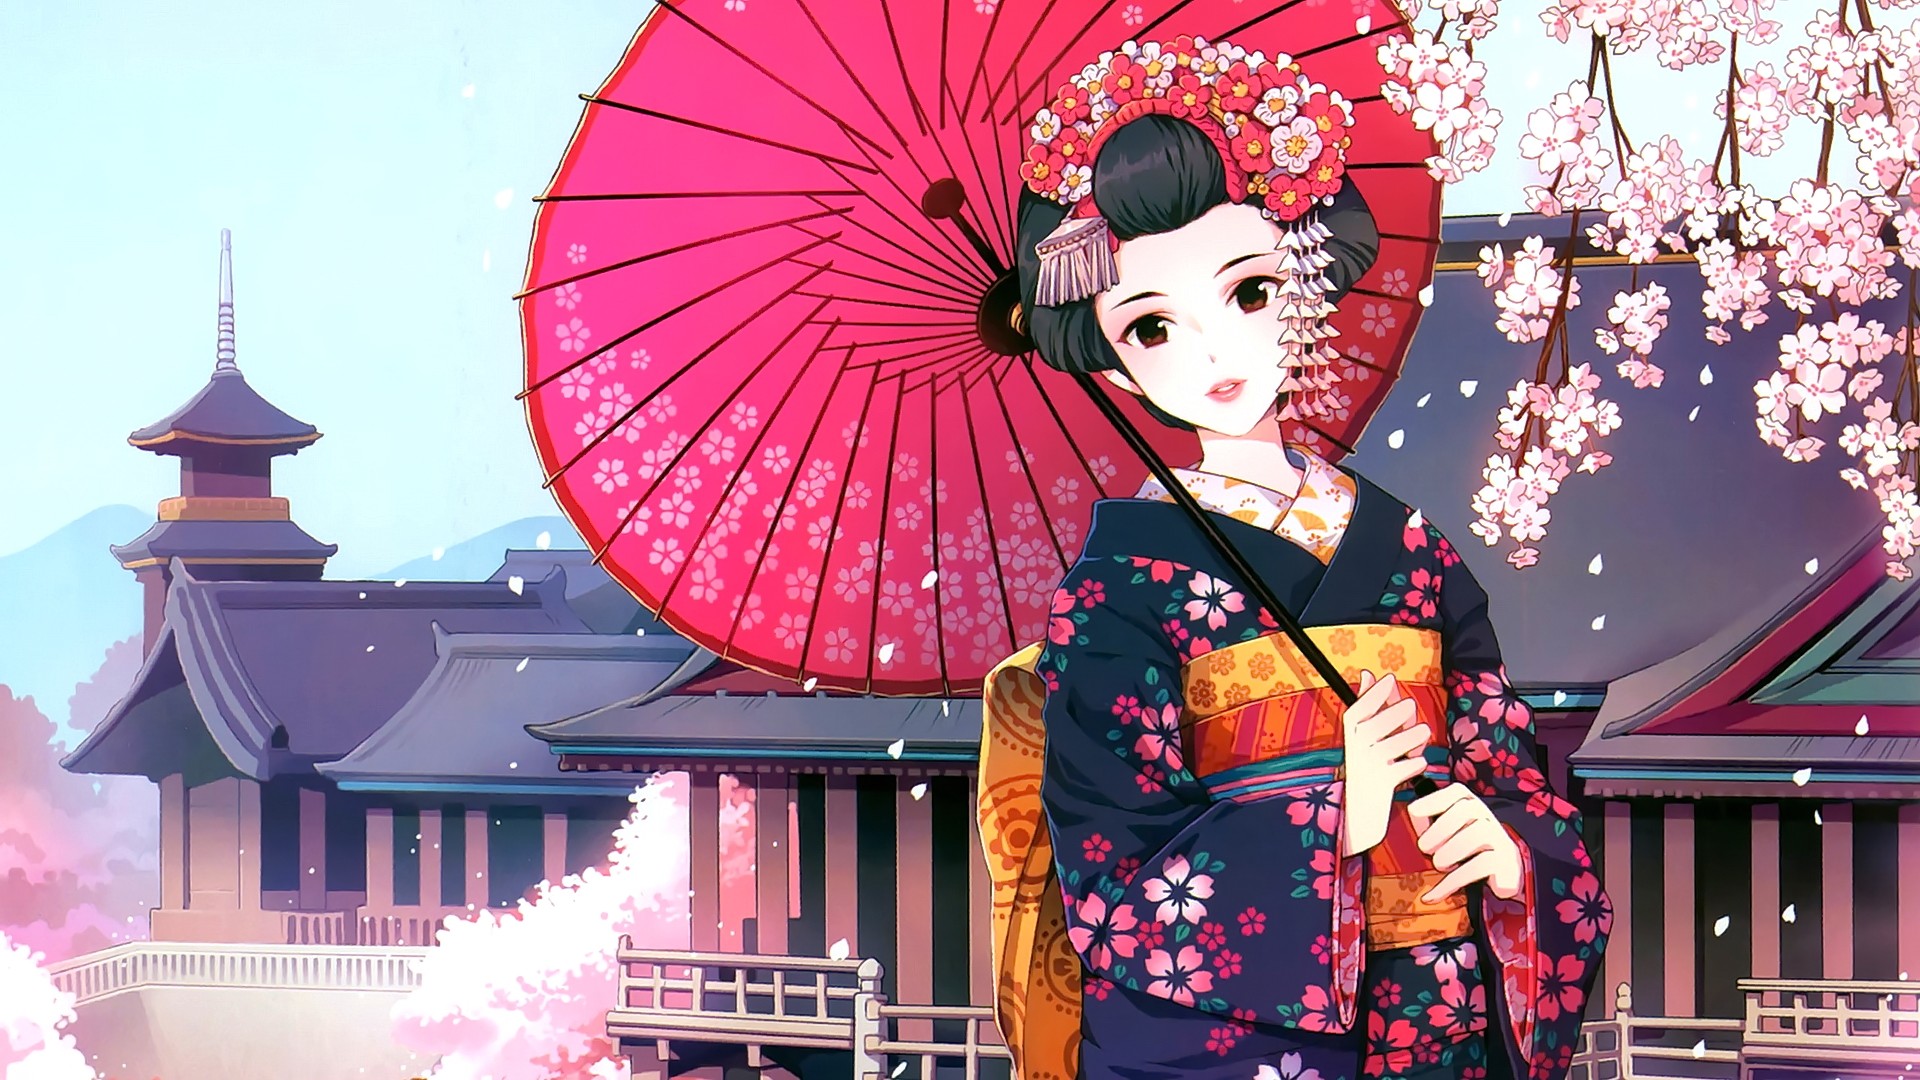 Anime 1920x1080 anime anime girls kimono Asian architecture cherry blossom umbrella paper umbrellas Japanese clothes geisha traditional clothing